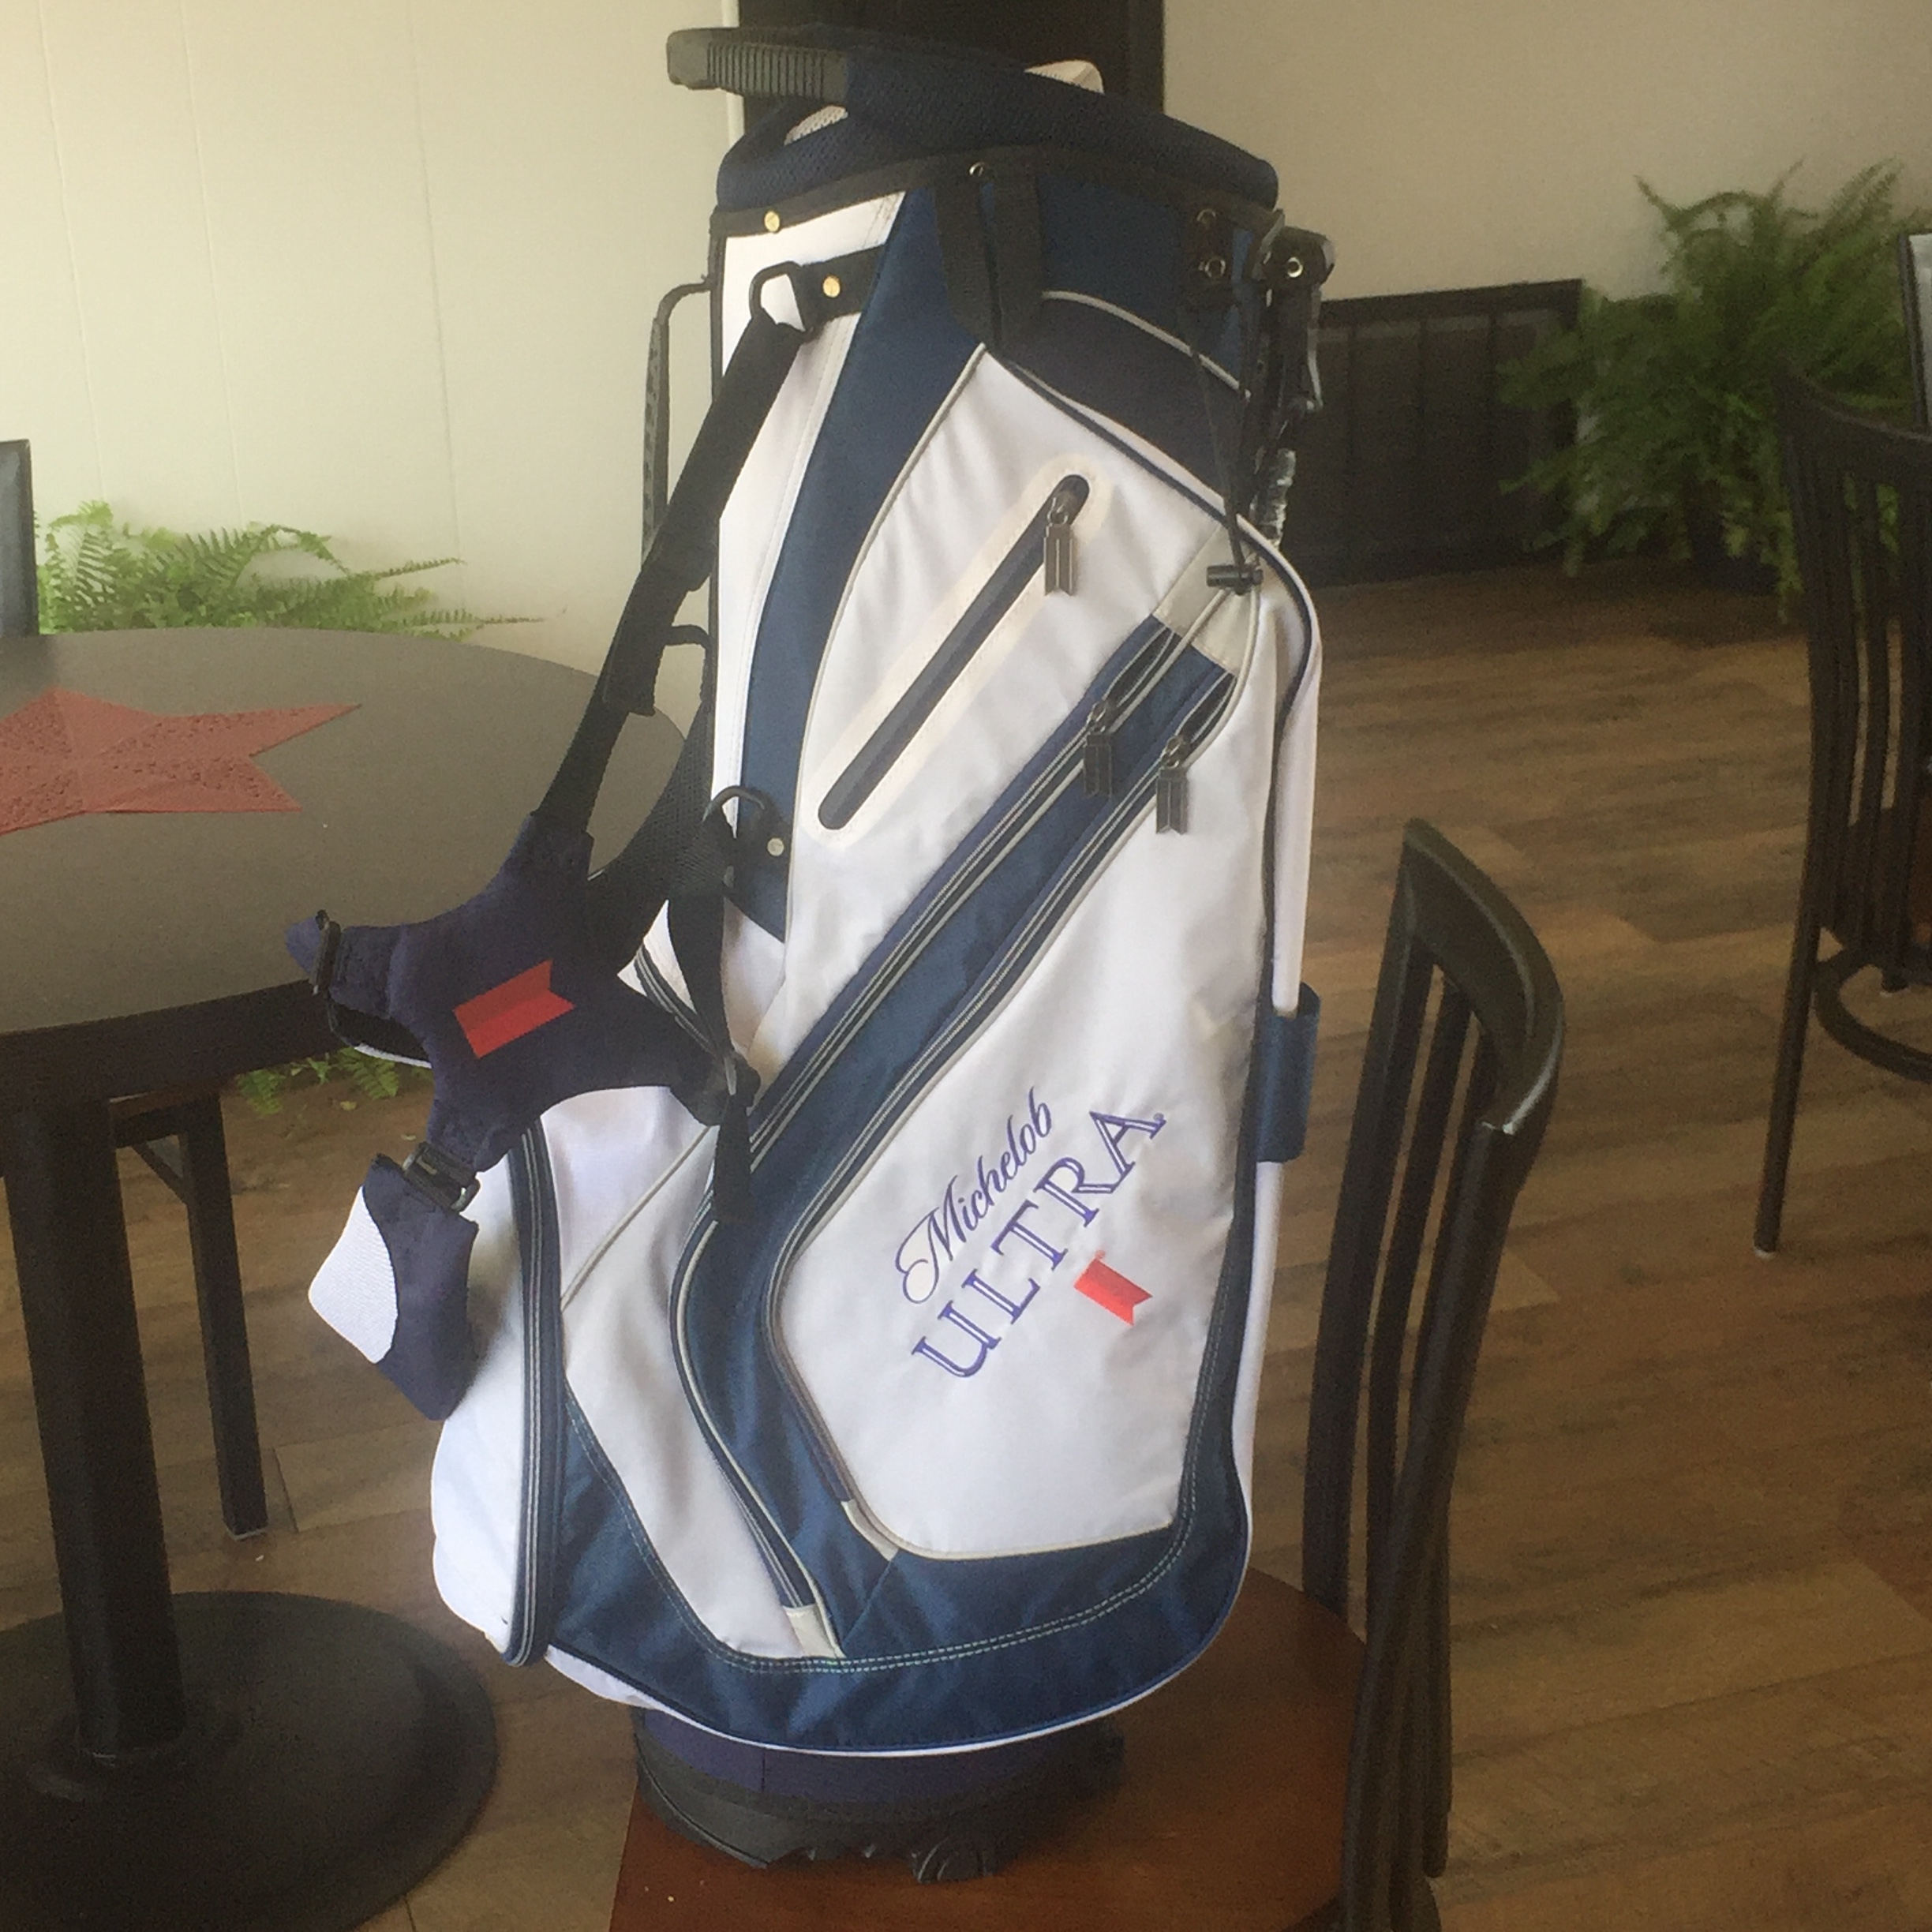 Michelob ULTRA Golf Bag